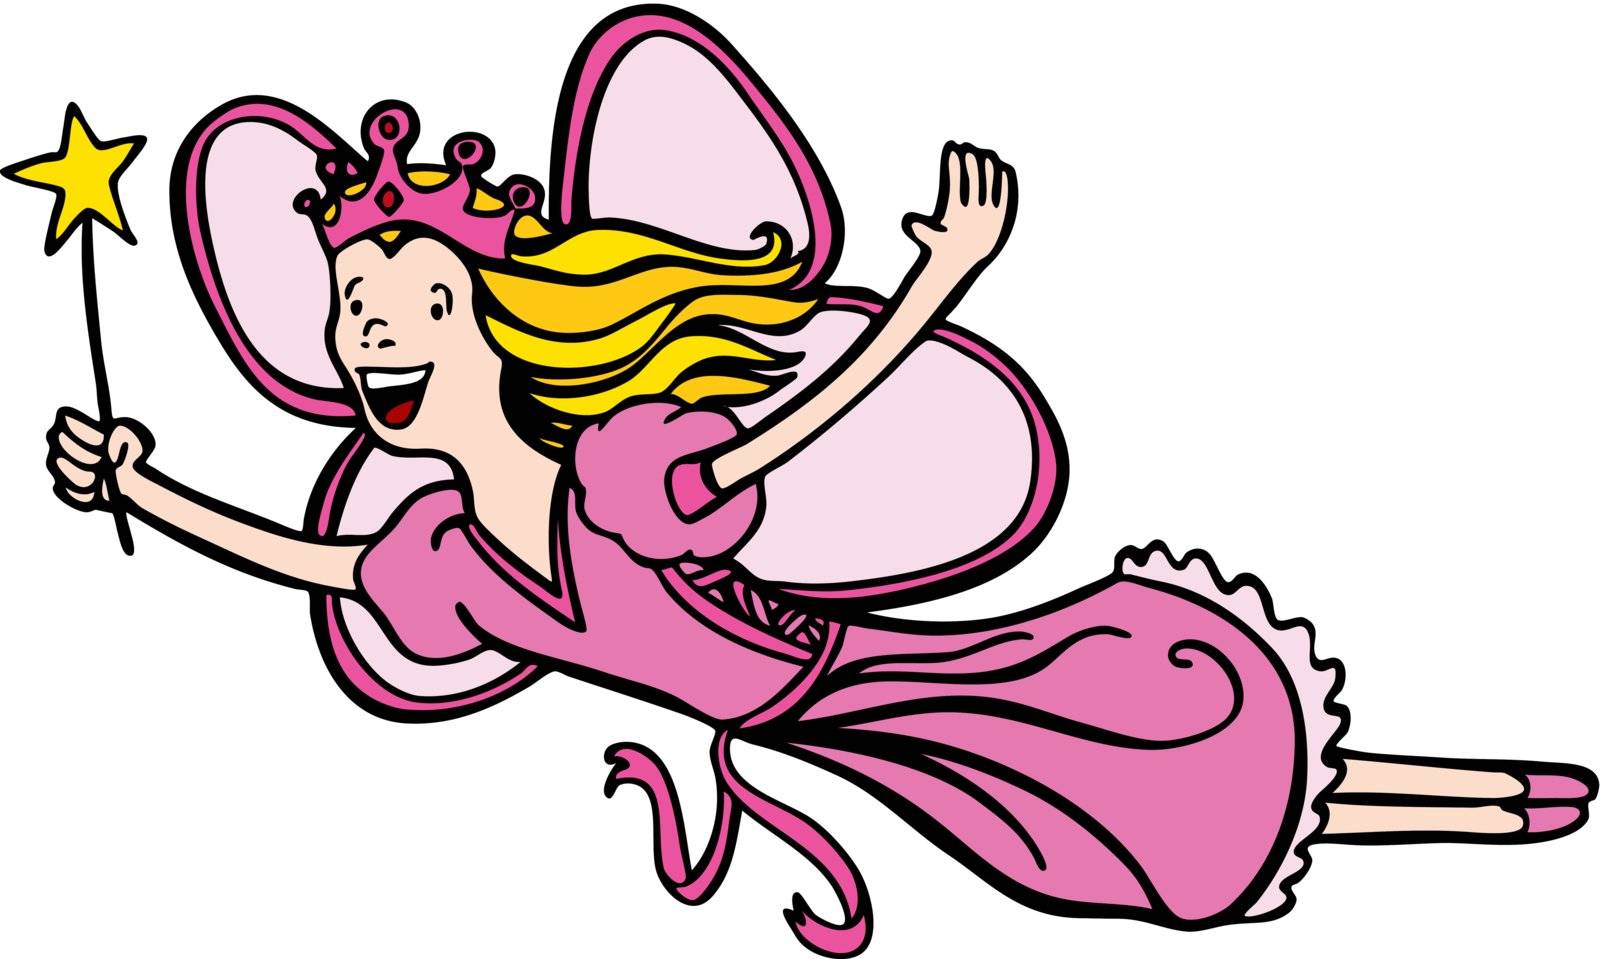 An image of a princess fairy.